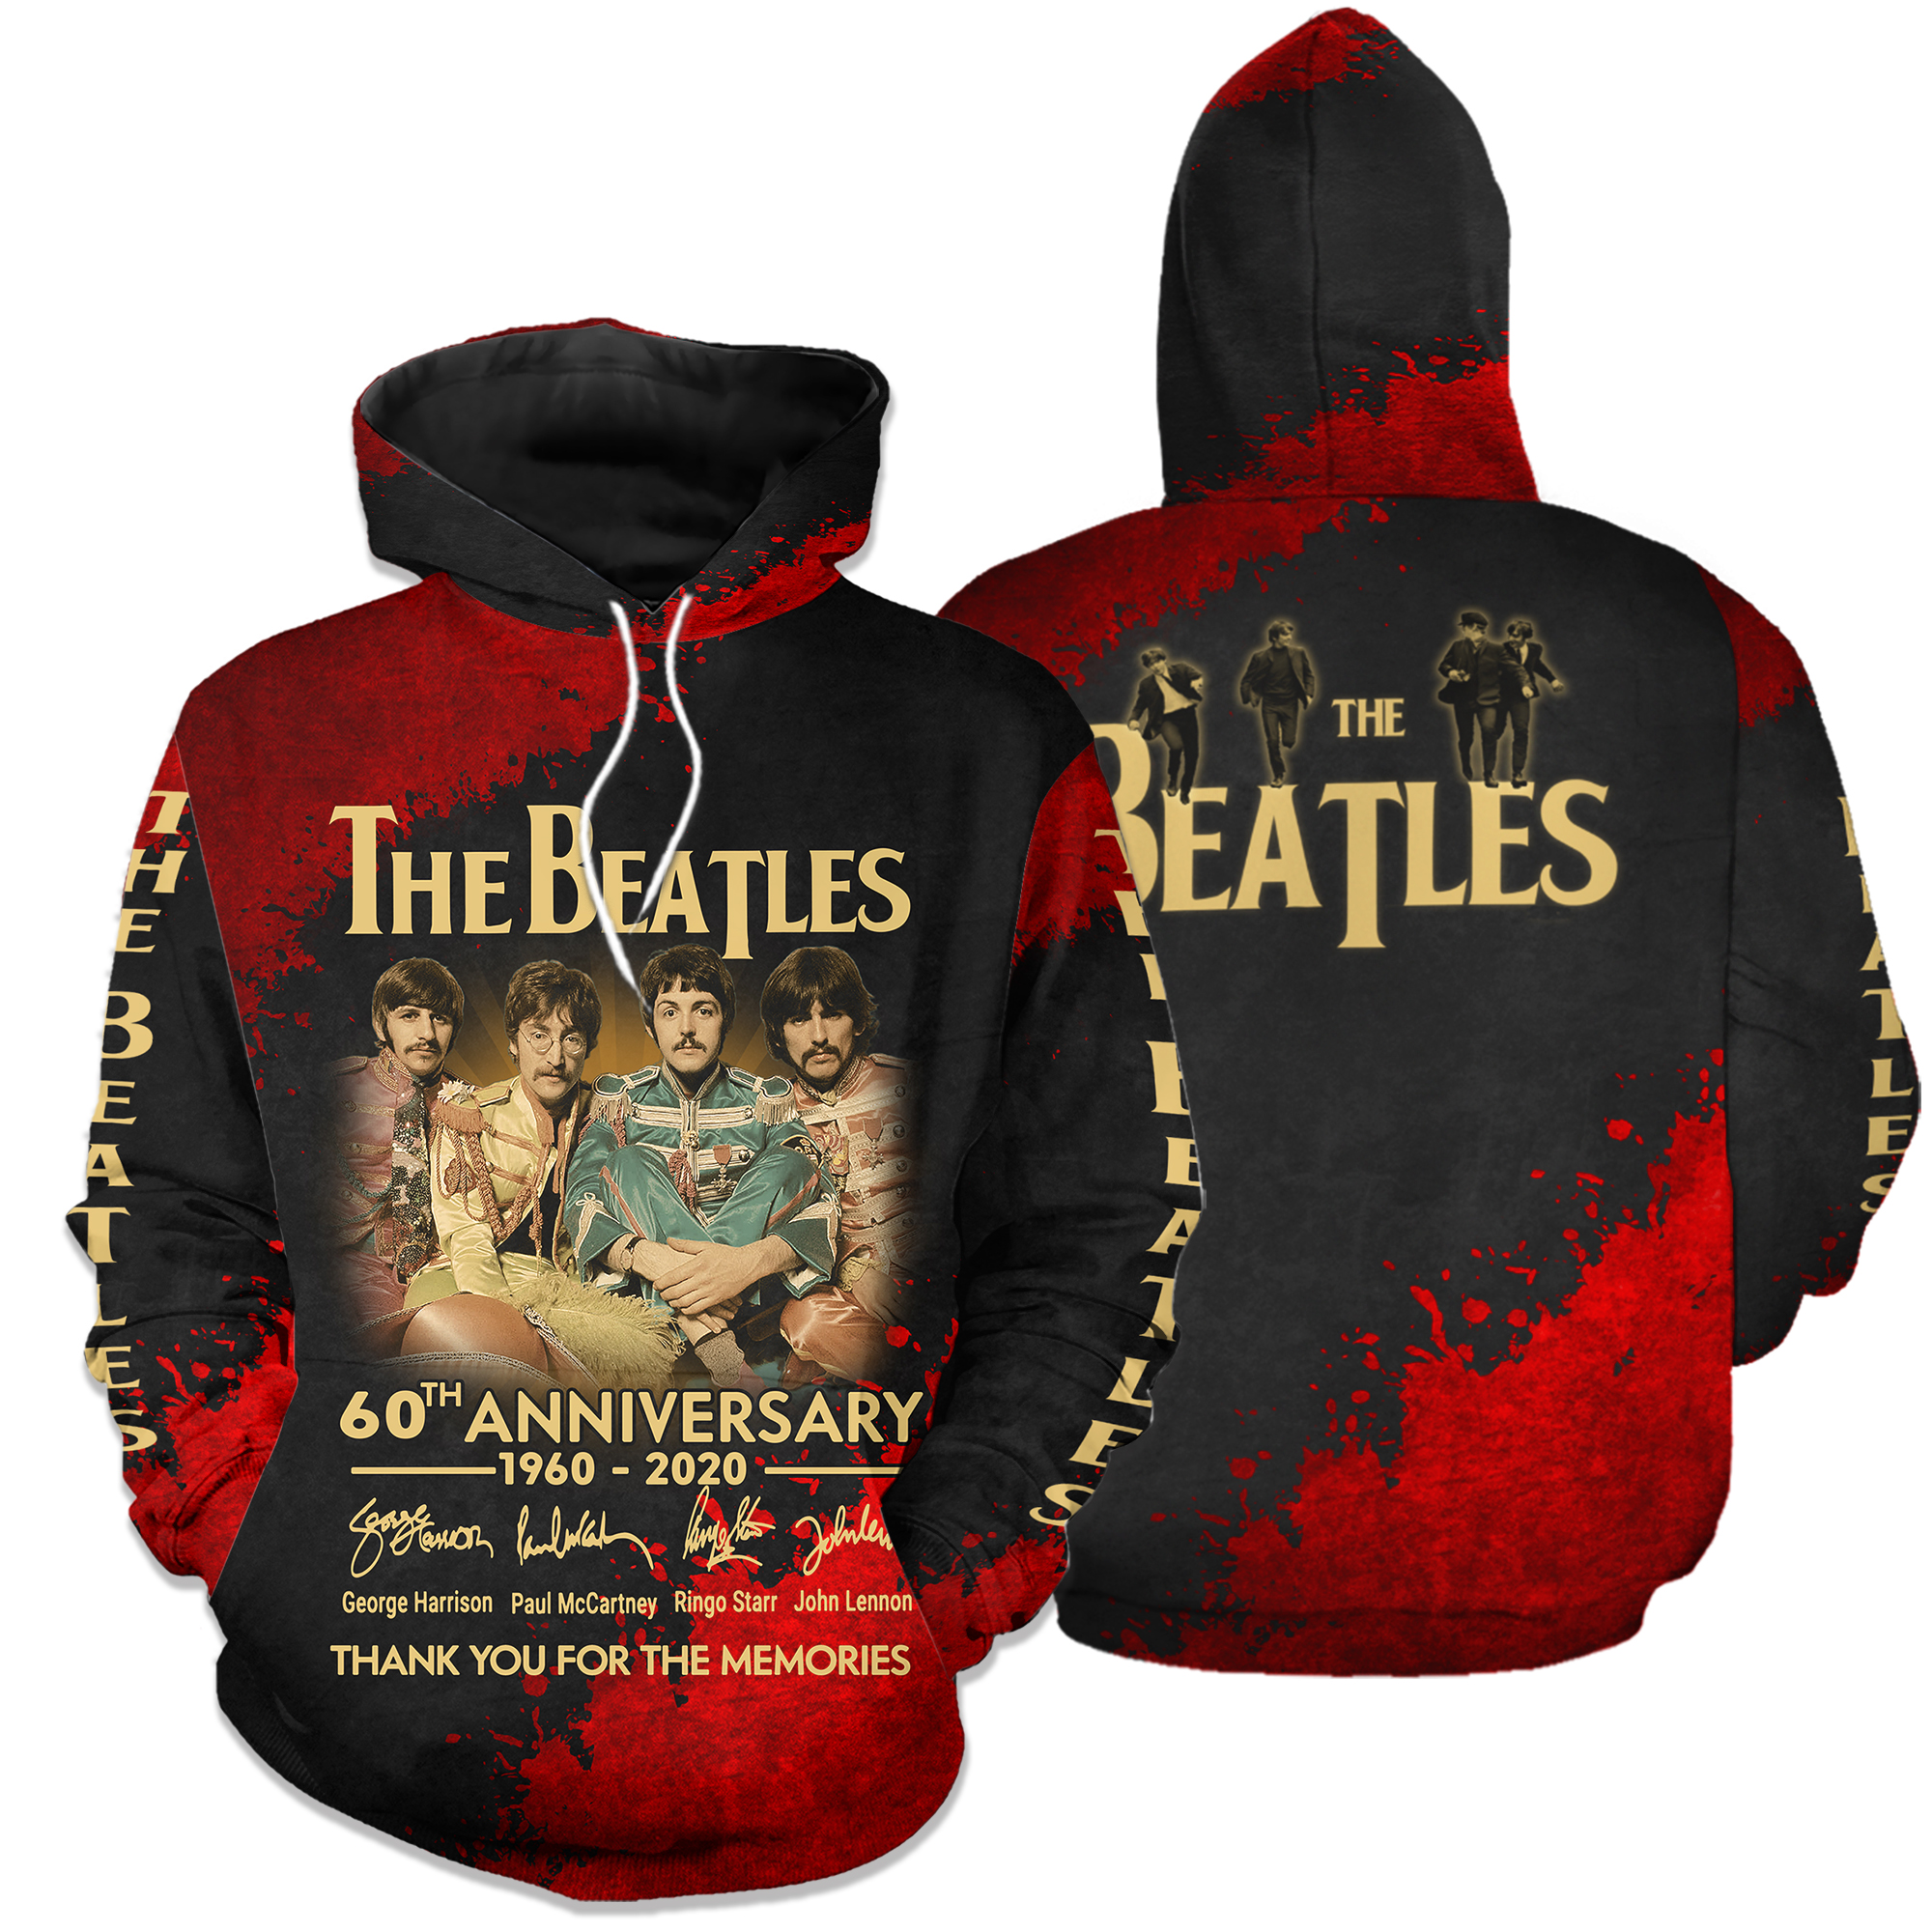 The beatles 60th anniversary 1960-2020 full printing hoodie